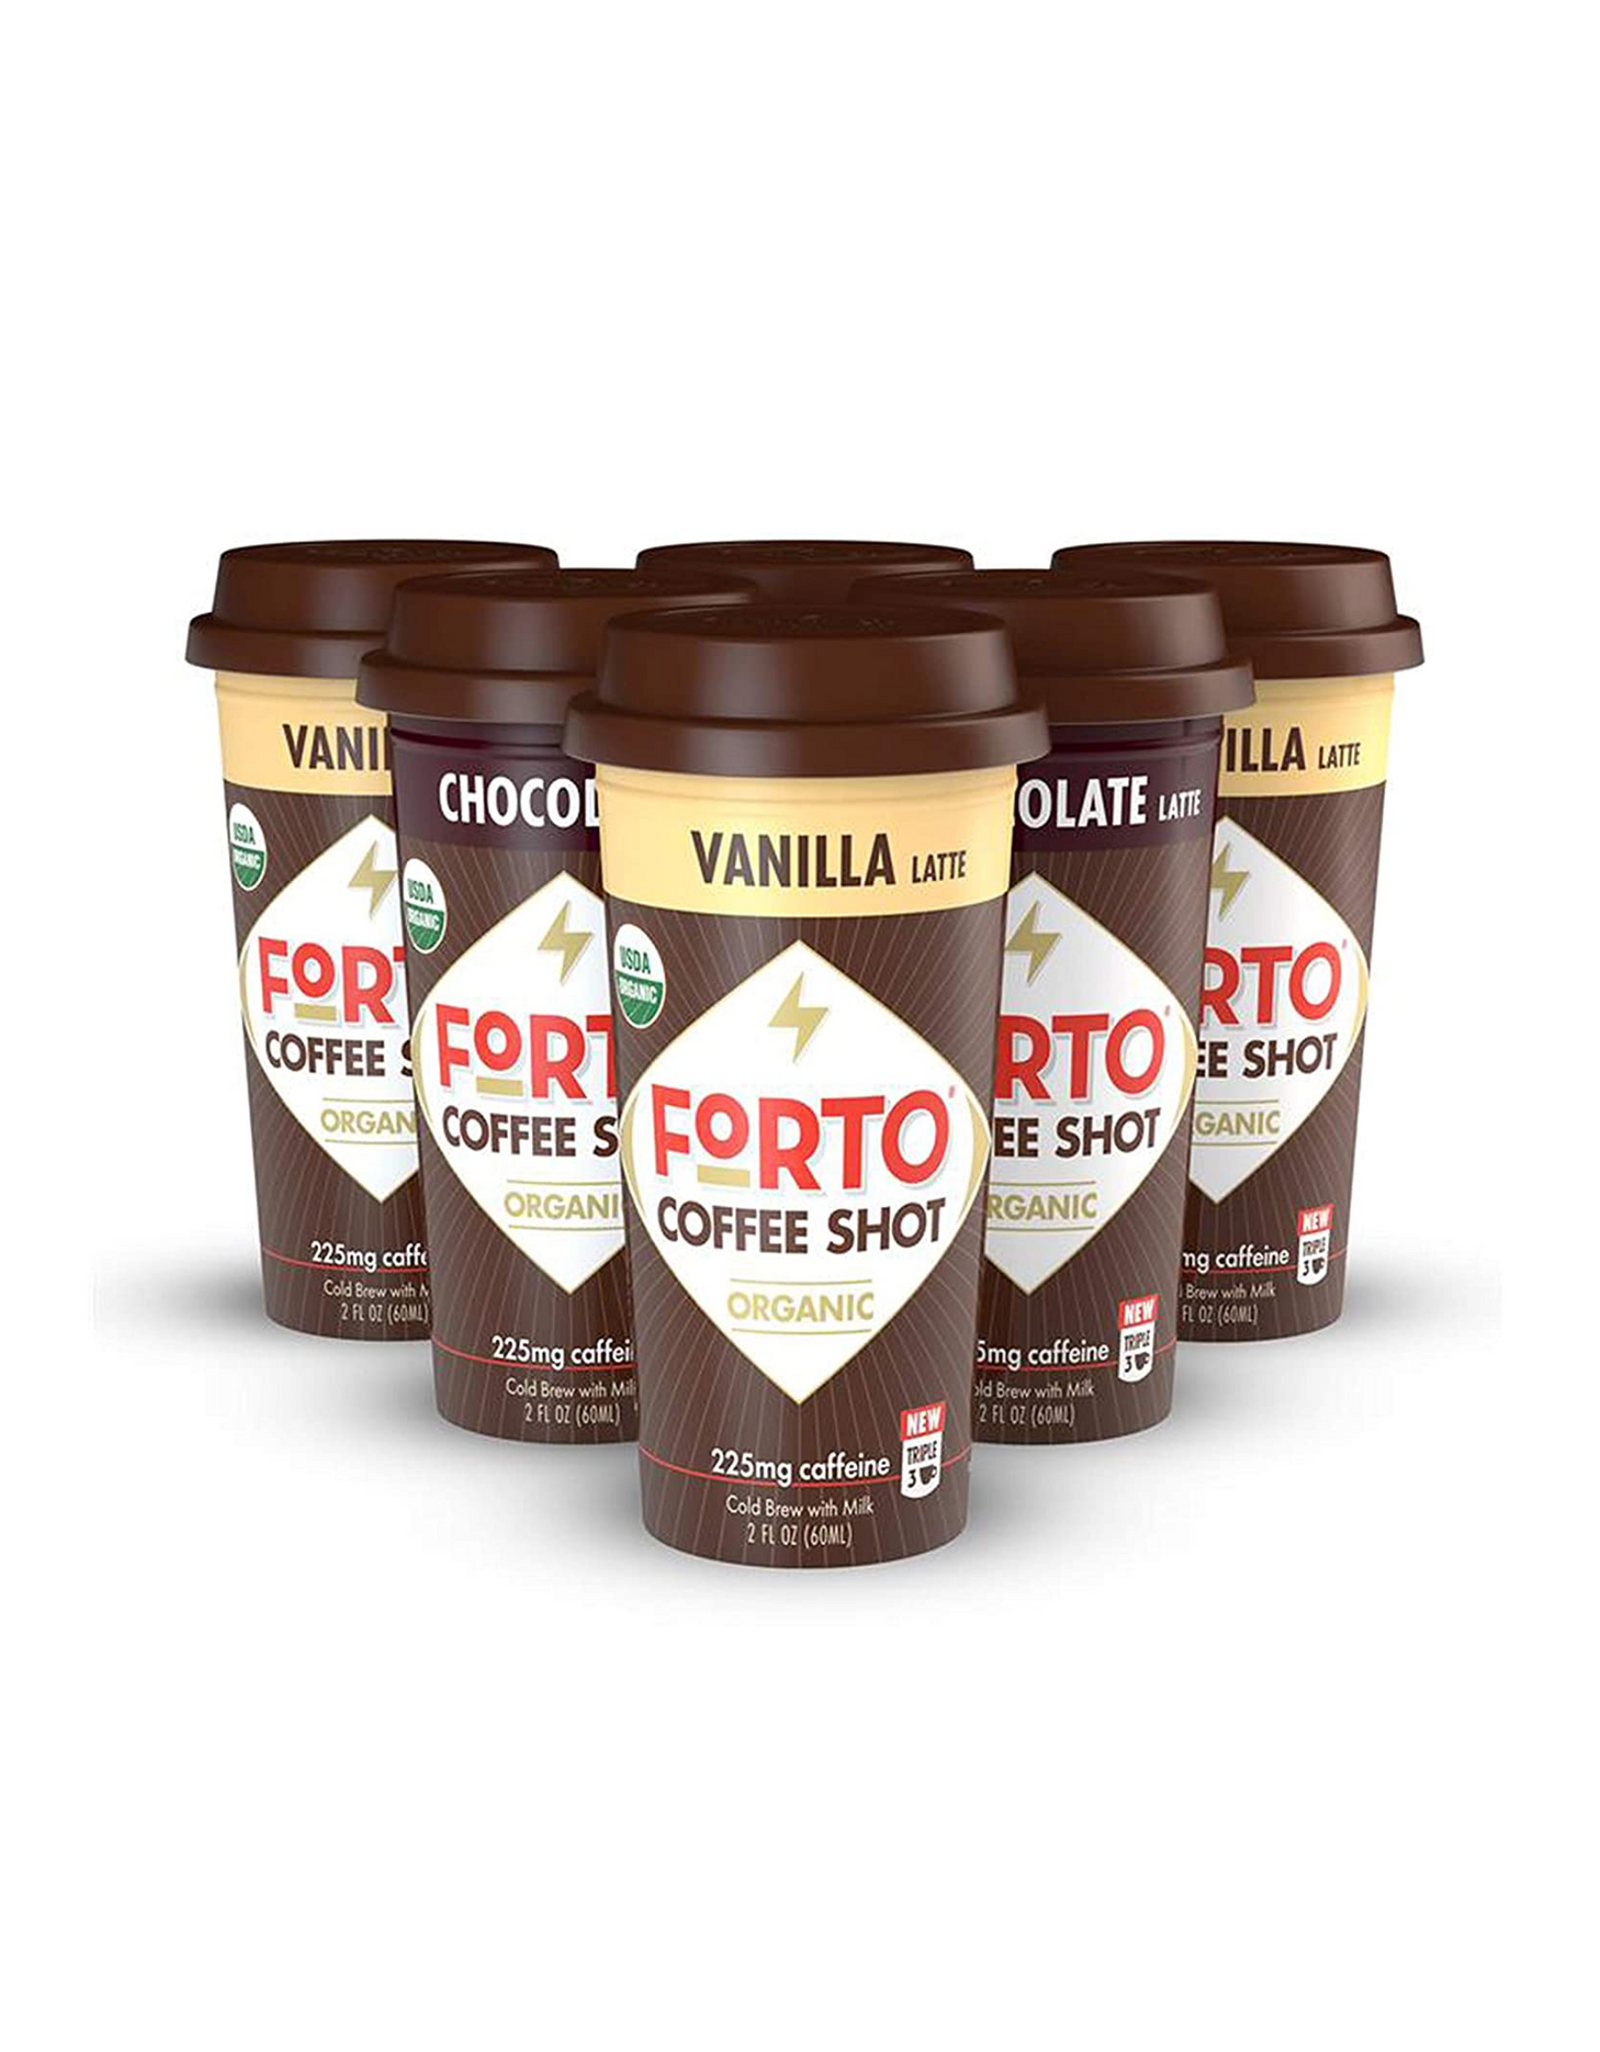 FORTO Coffee Shots - Variety Pack, Organic, 2 fl oz (Pack of 6)